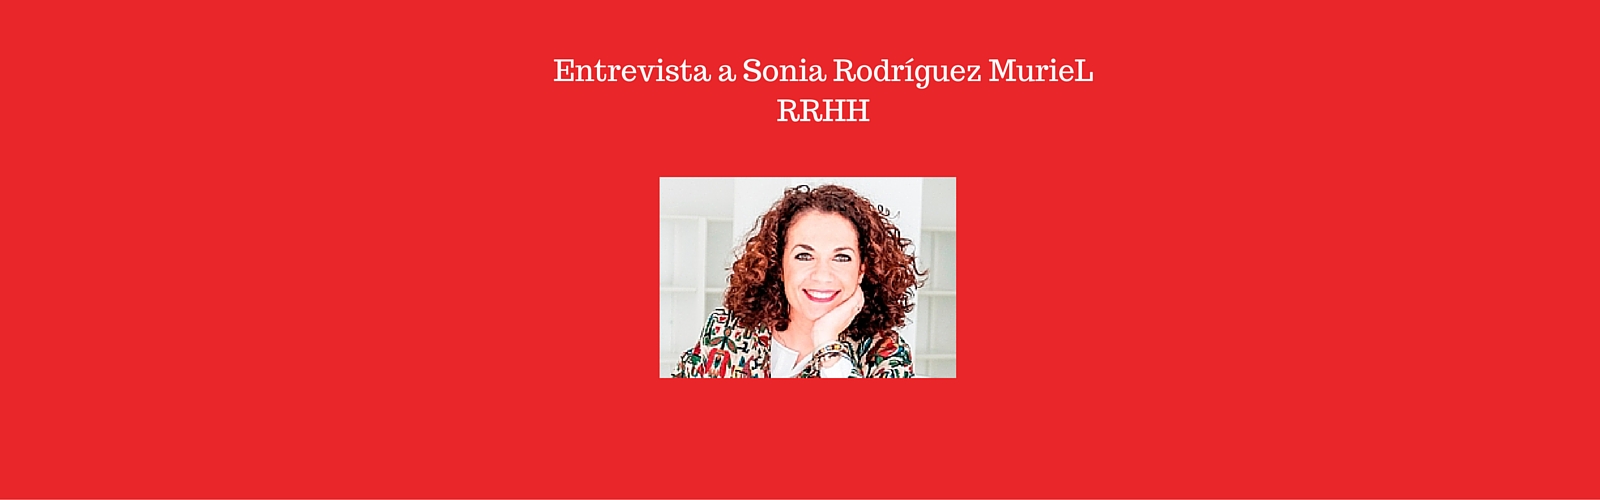 Entrevista a Sonia Rodríguez Muriel, experta en RRHH